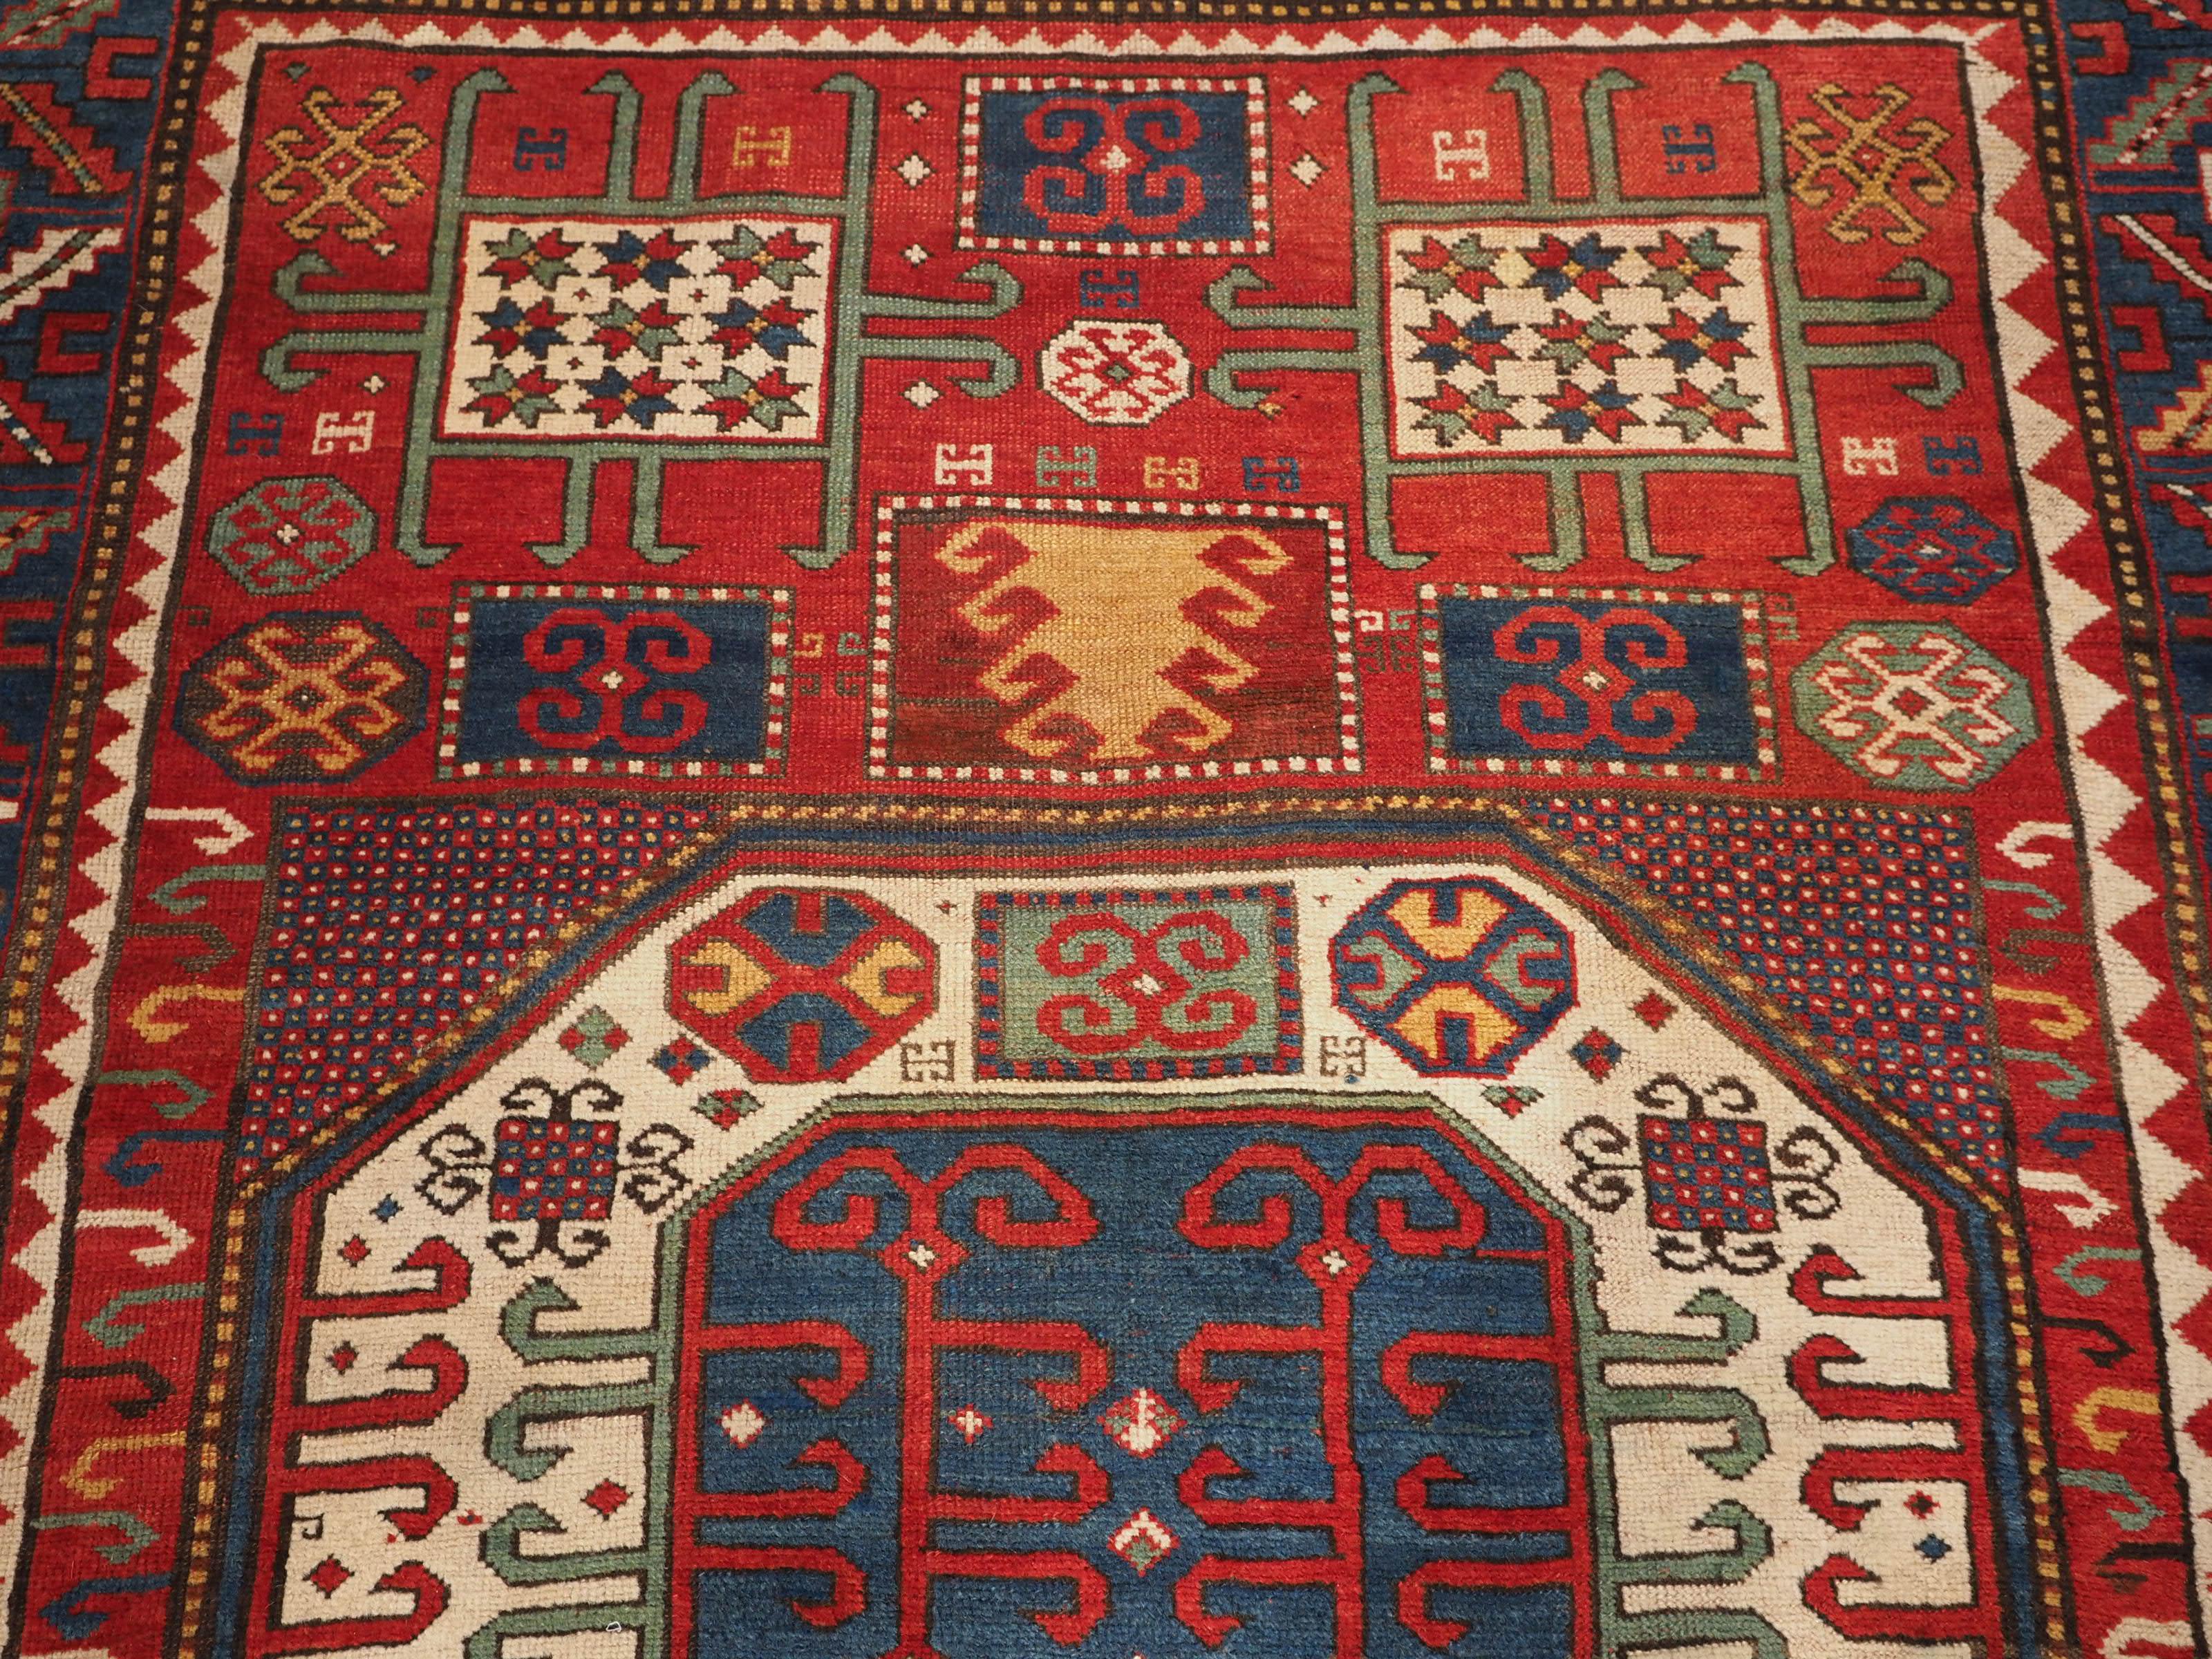 Wool Antique Caucasian Karachov Kazak Rug of Classic Design on a Red Ground For Sale